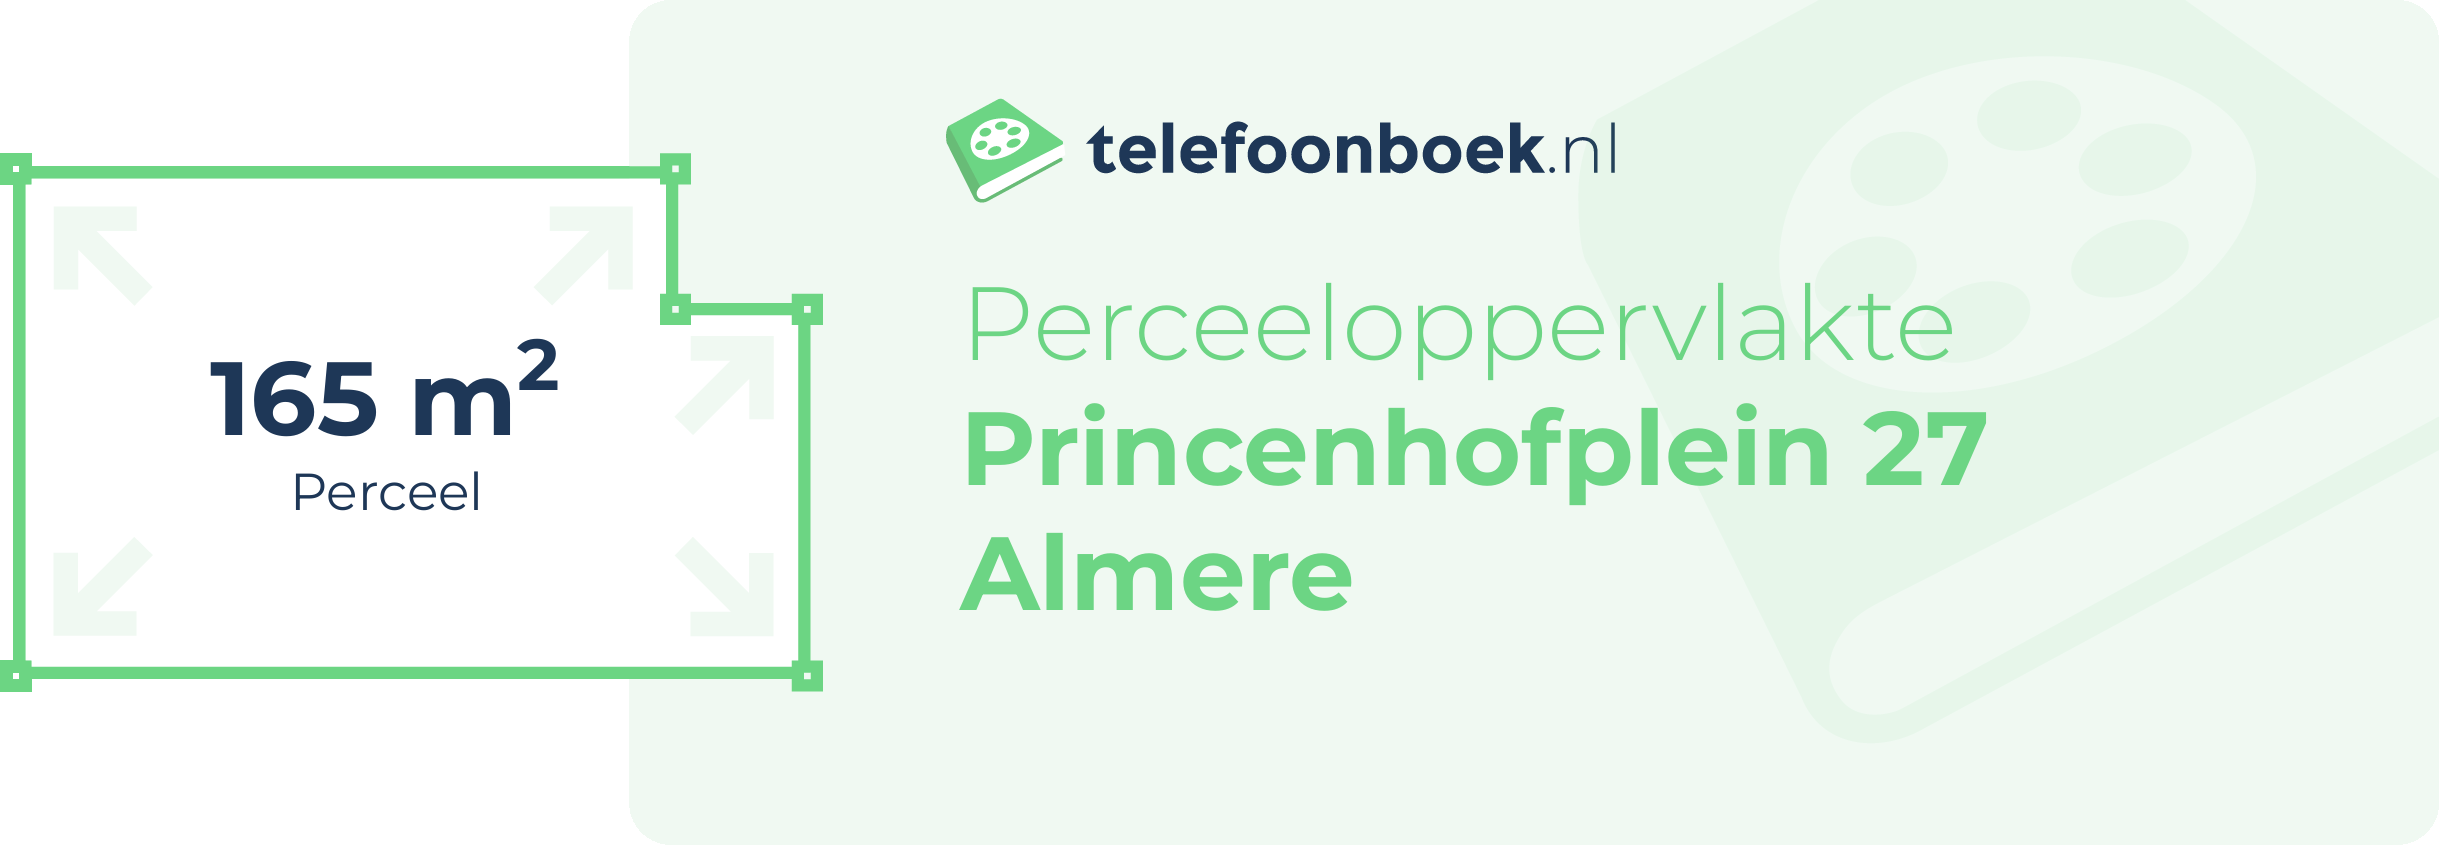 Perceeloppervlakte Princenhofplein 27 Almere